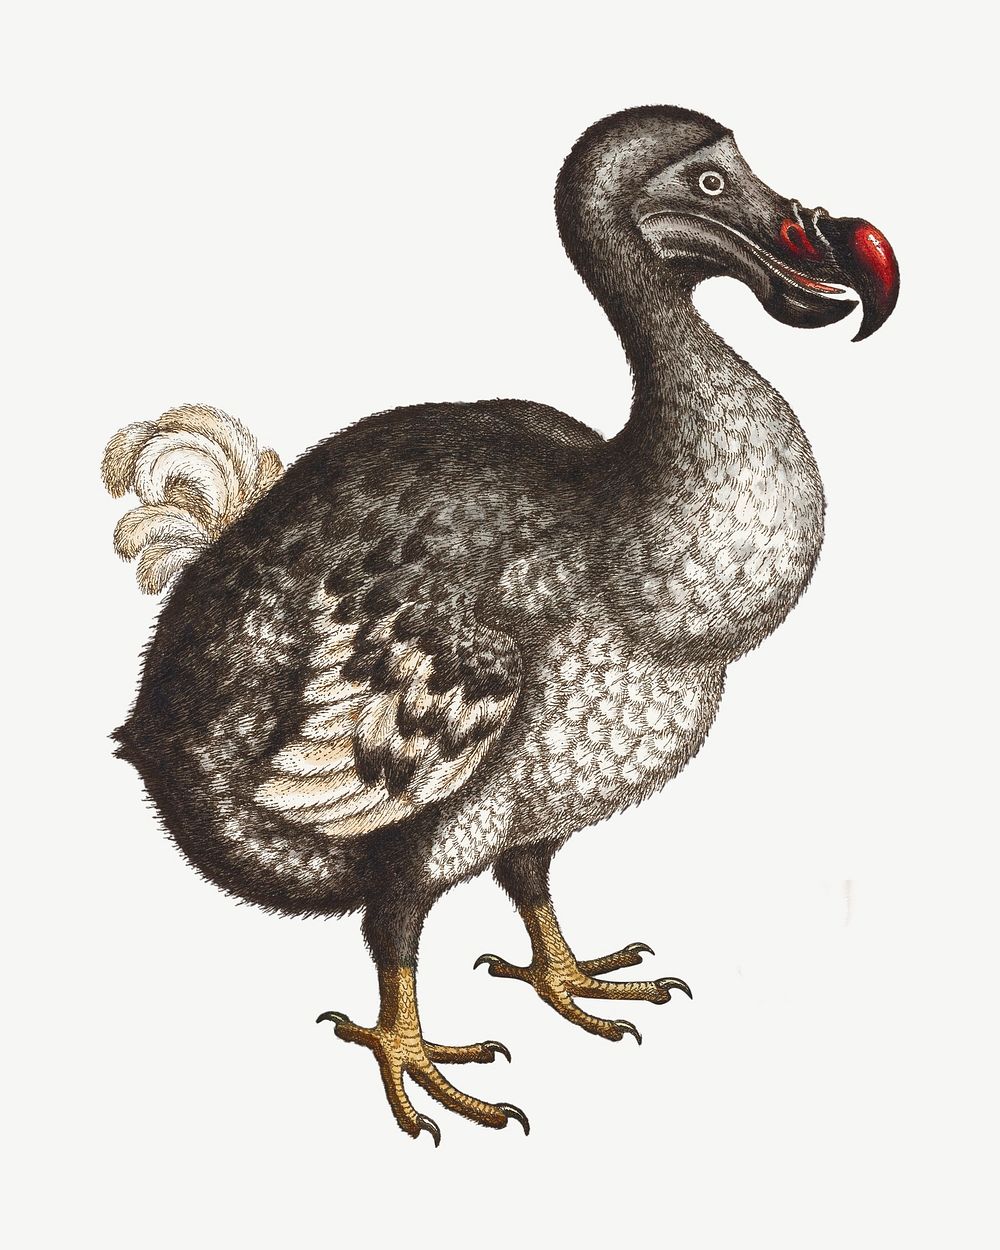 Dodo bird, vintage extinct animal illustration by George Edwards psd. Remixed by rawpixel.